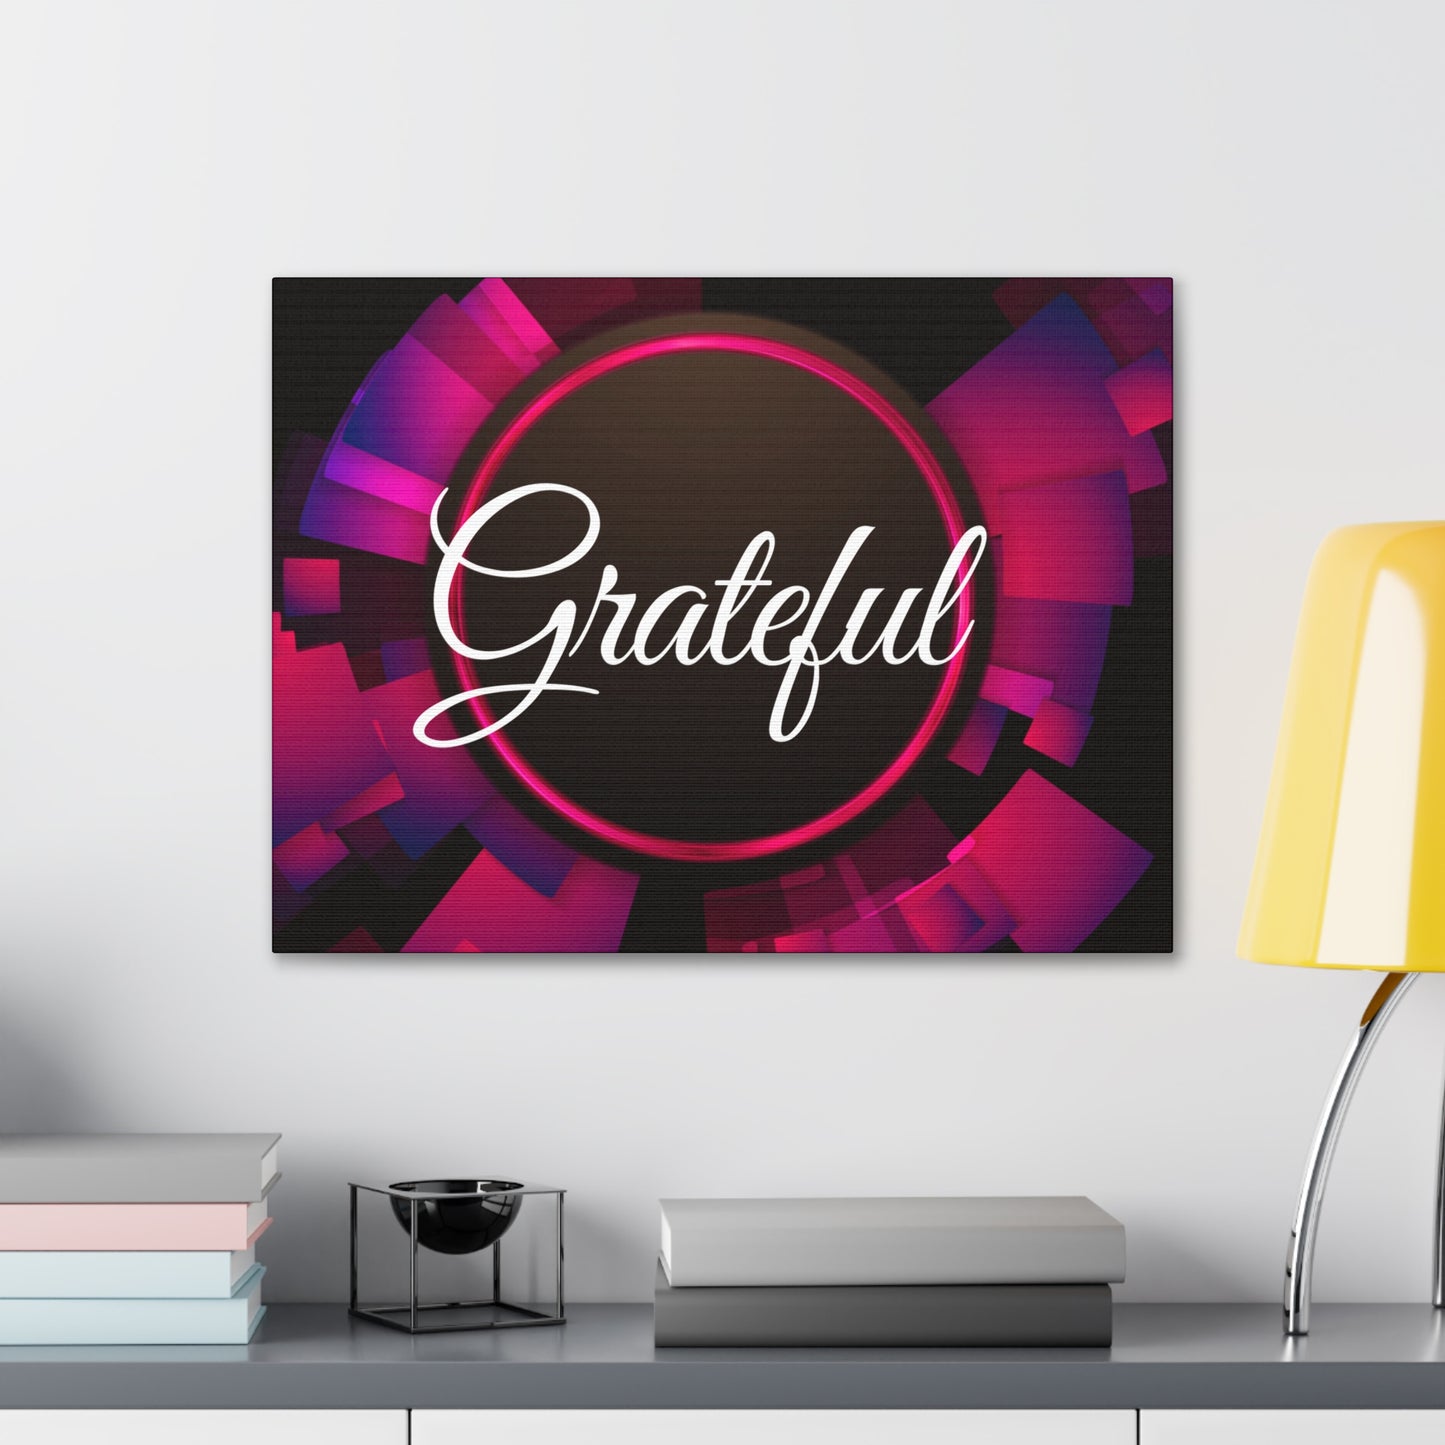 Christian Wall Art: Grateful (Wood Frame Ready to Hang)